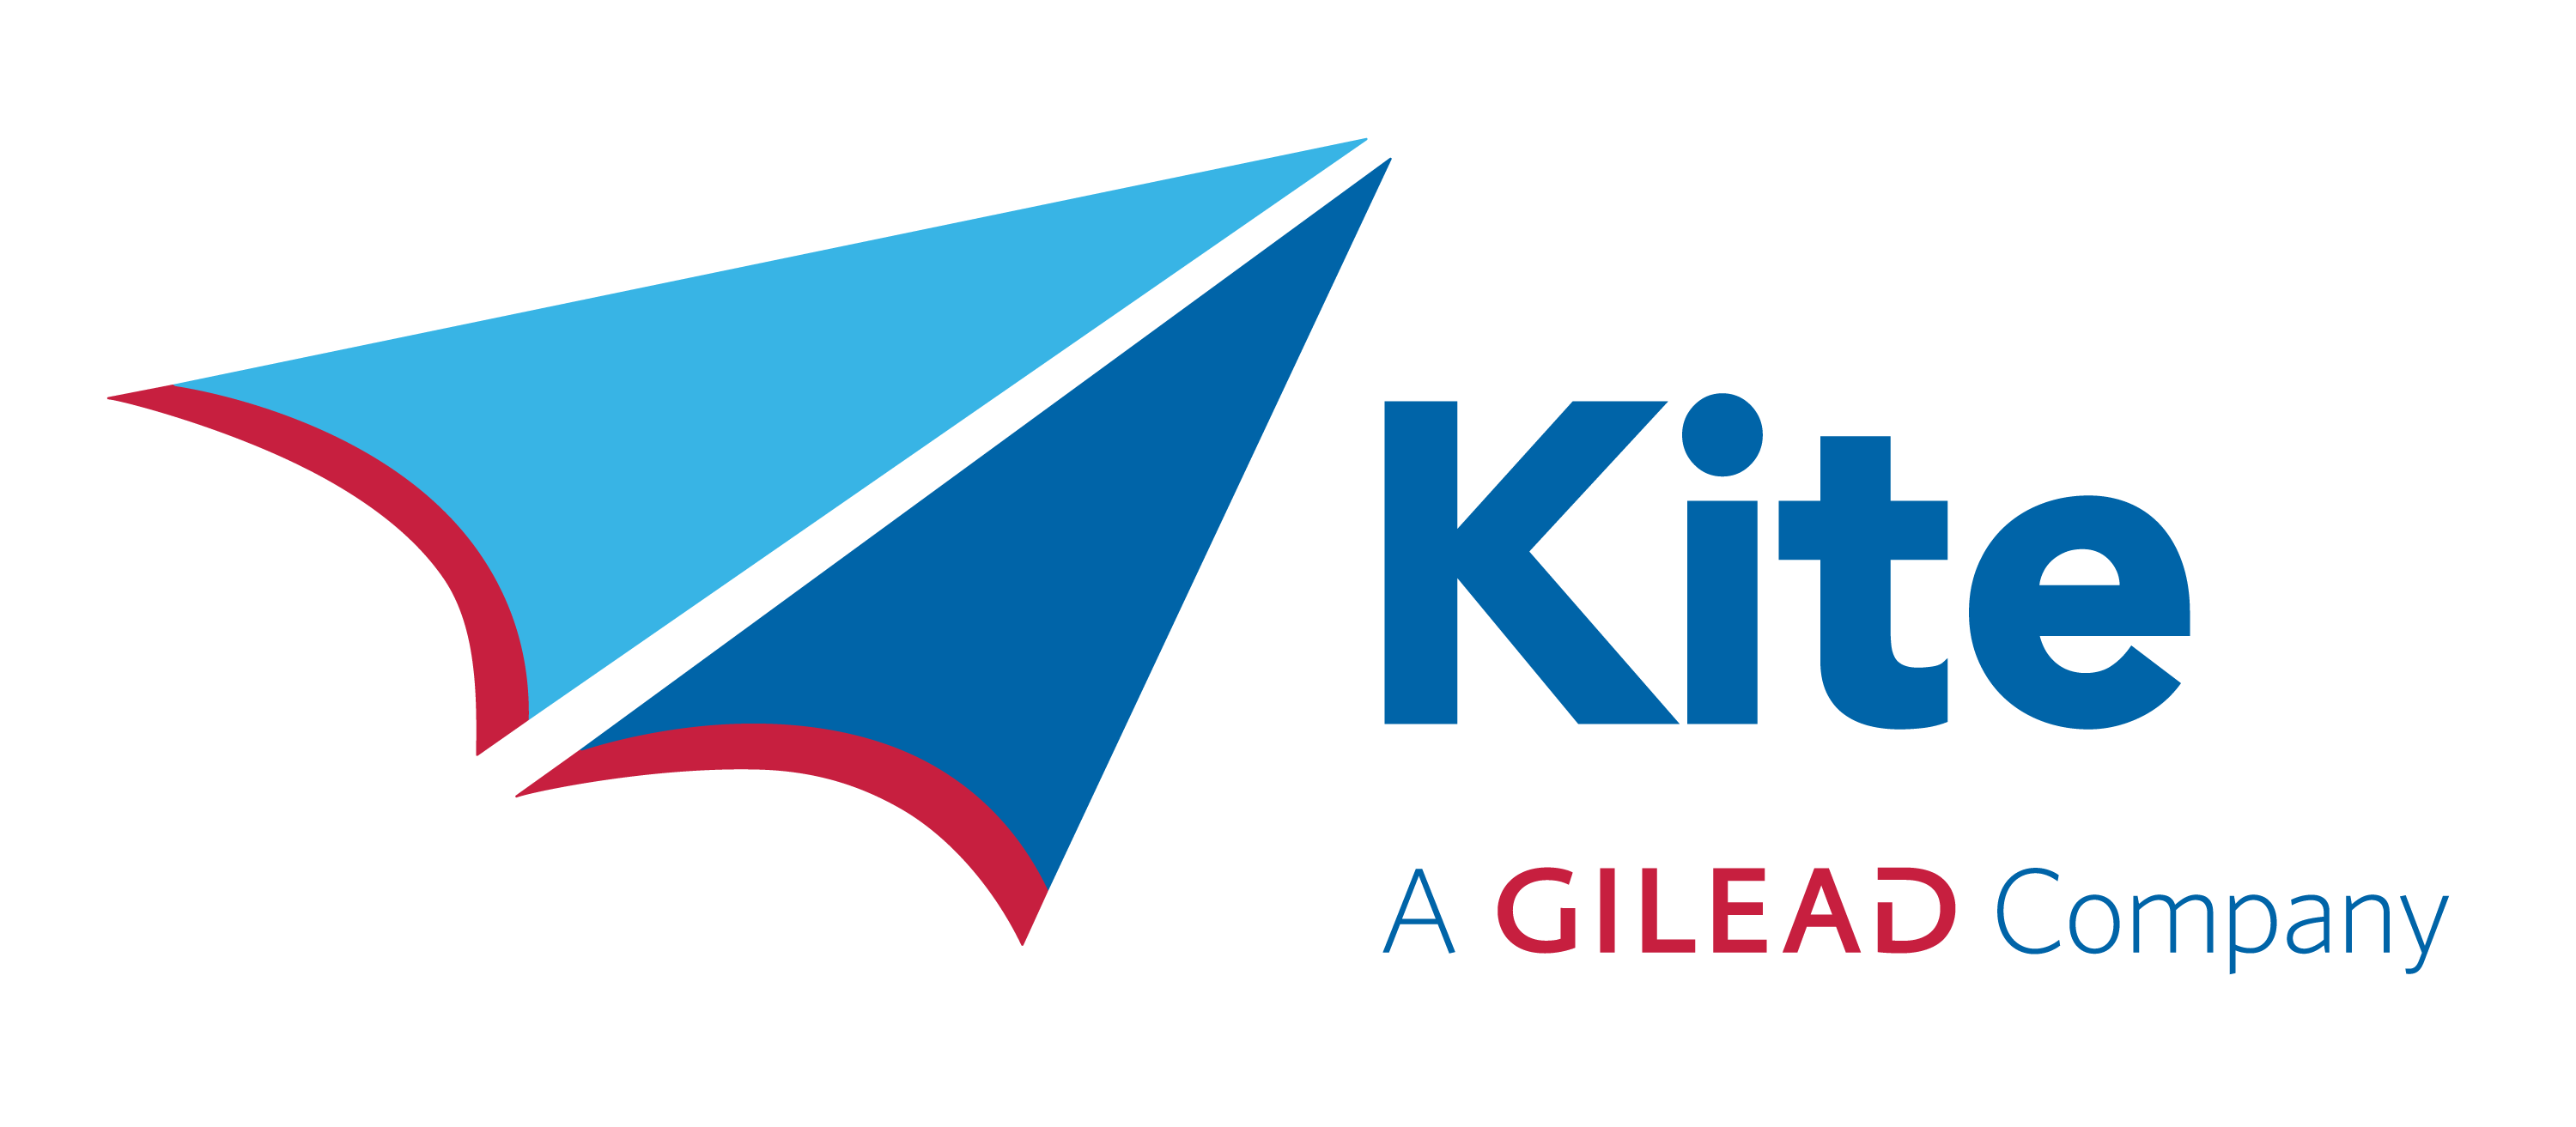 kite gilead